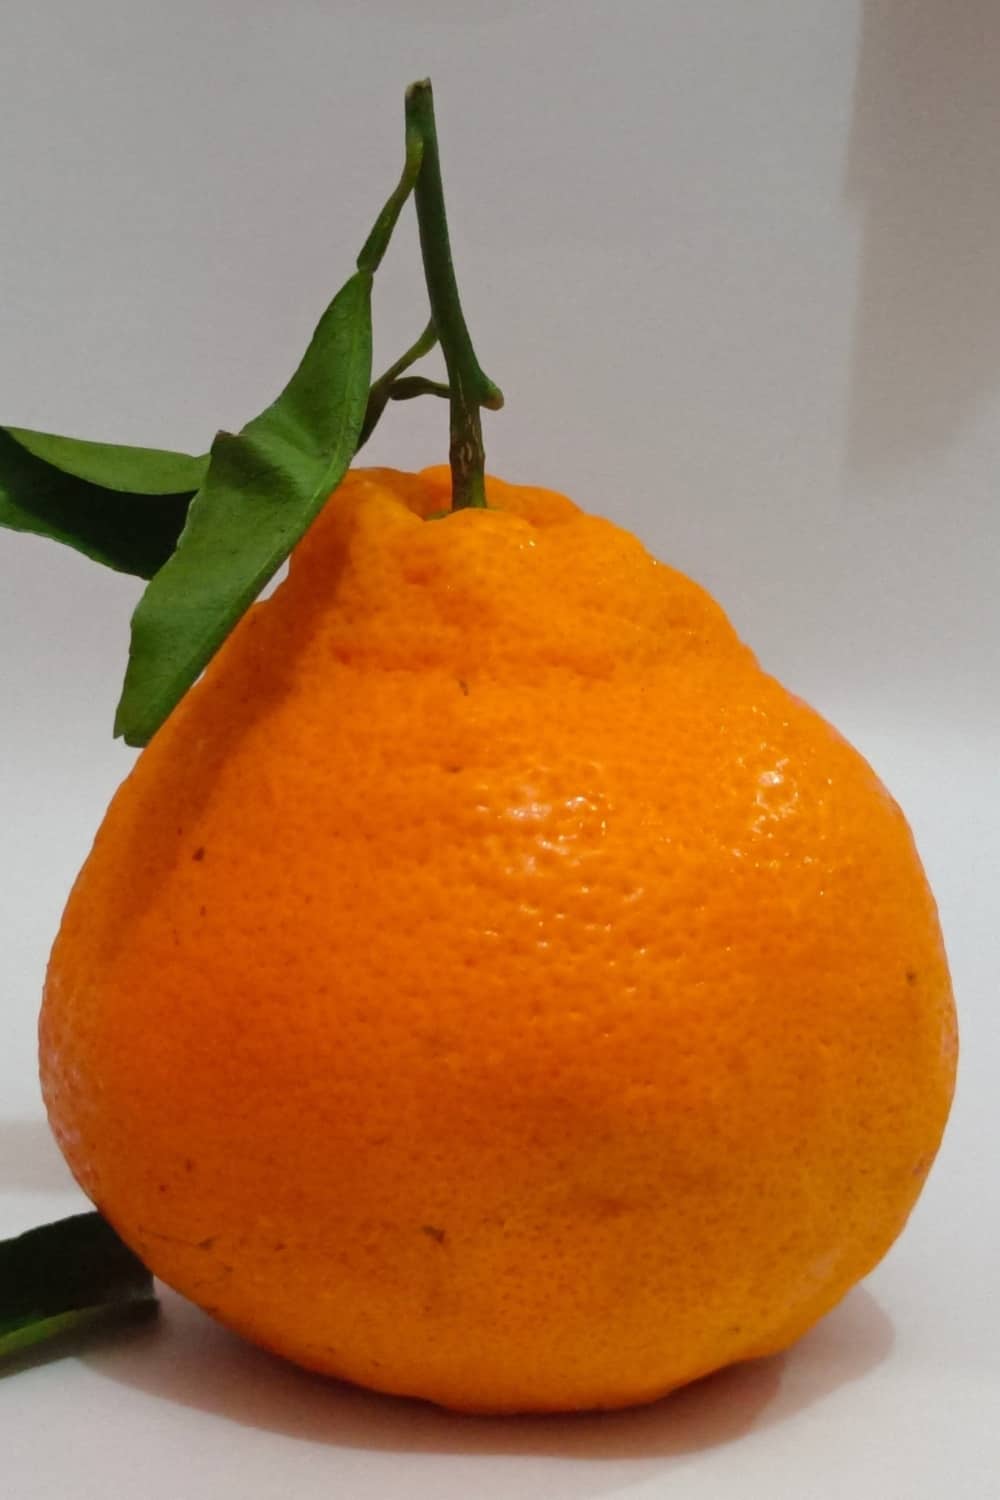 Naranja Dekopon la variedad dulce y sin pepitas de las mandarinas.